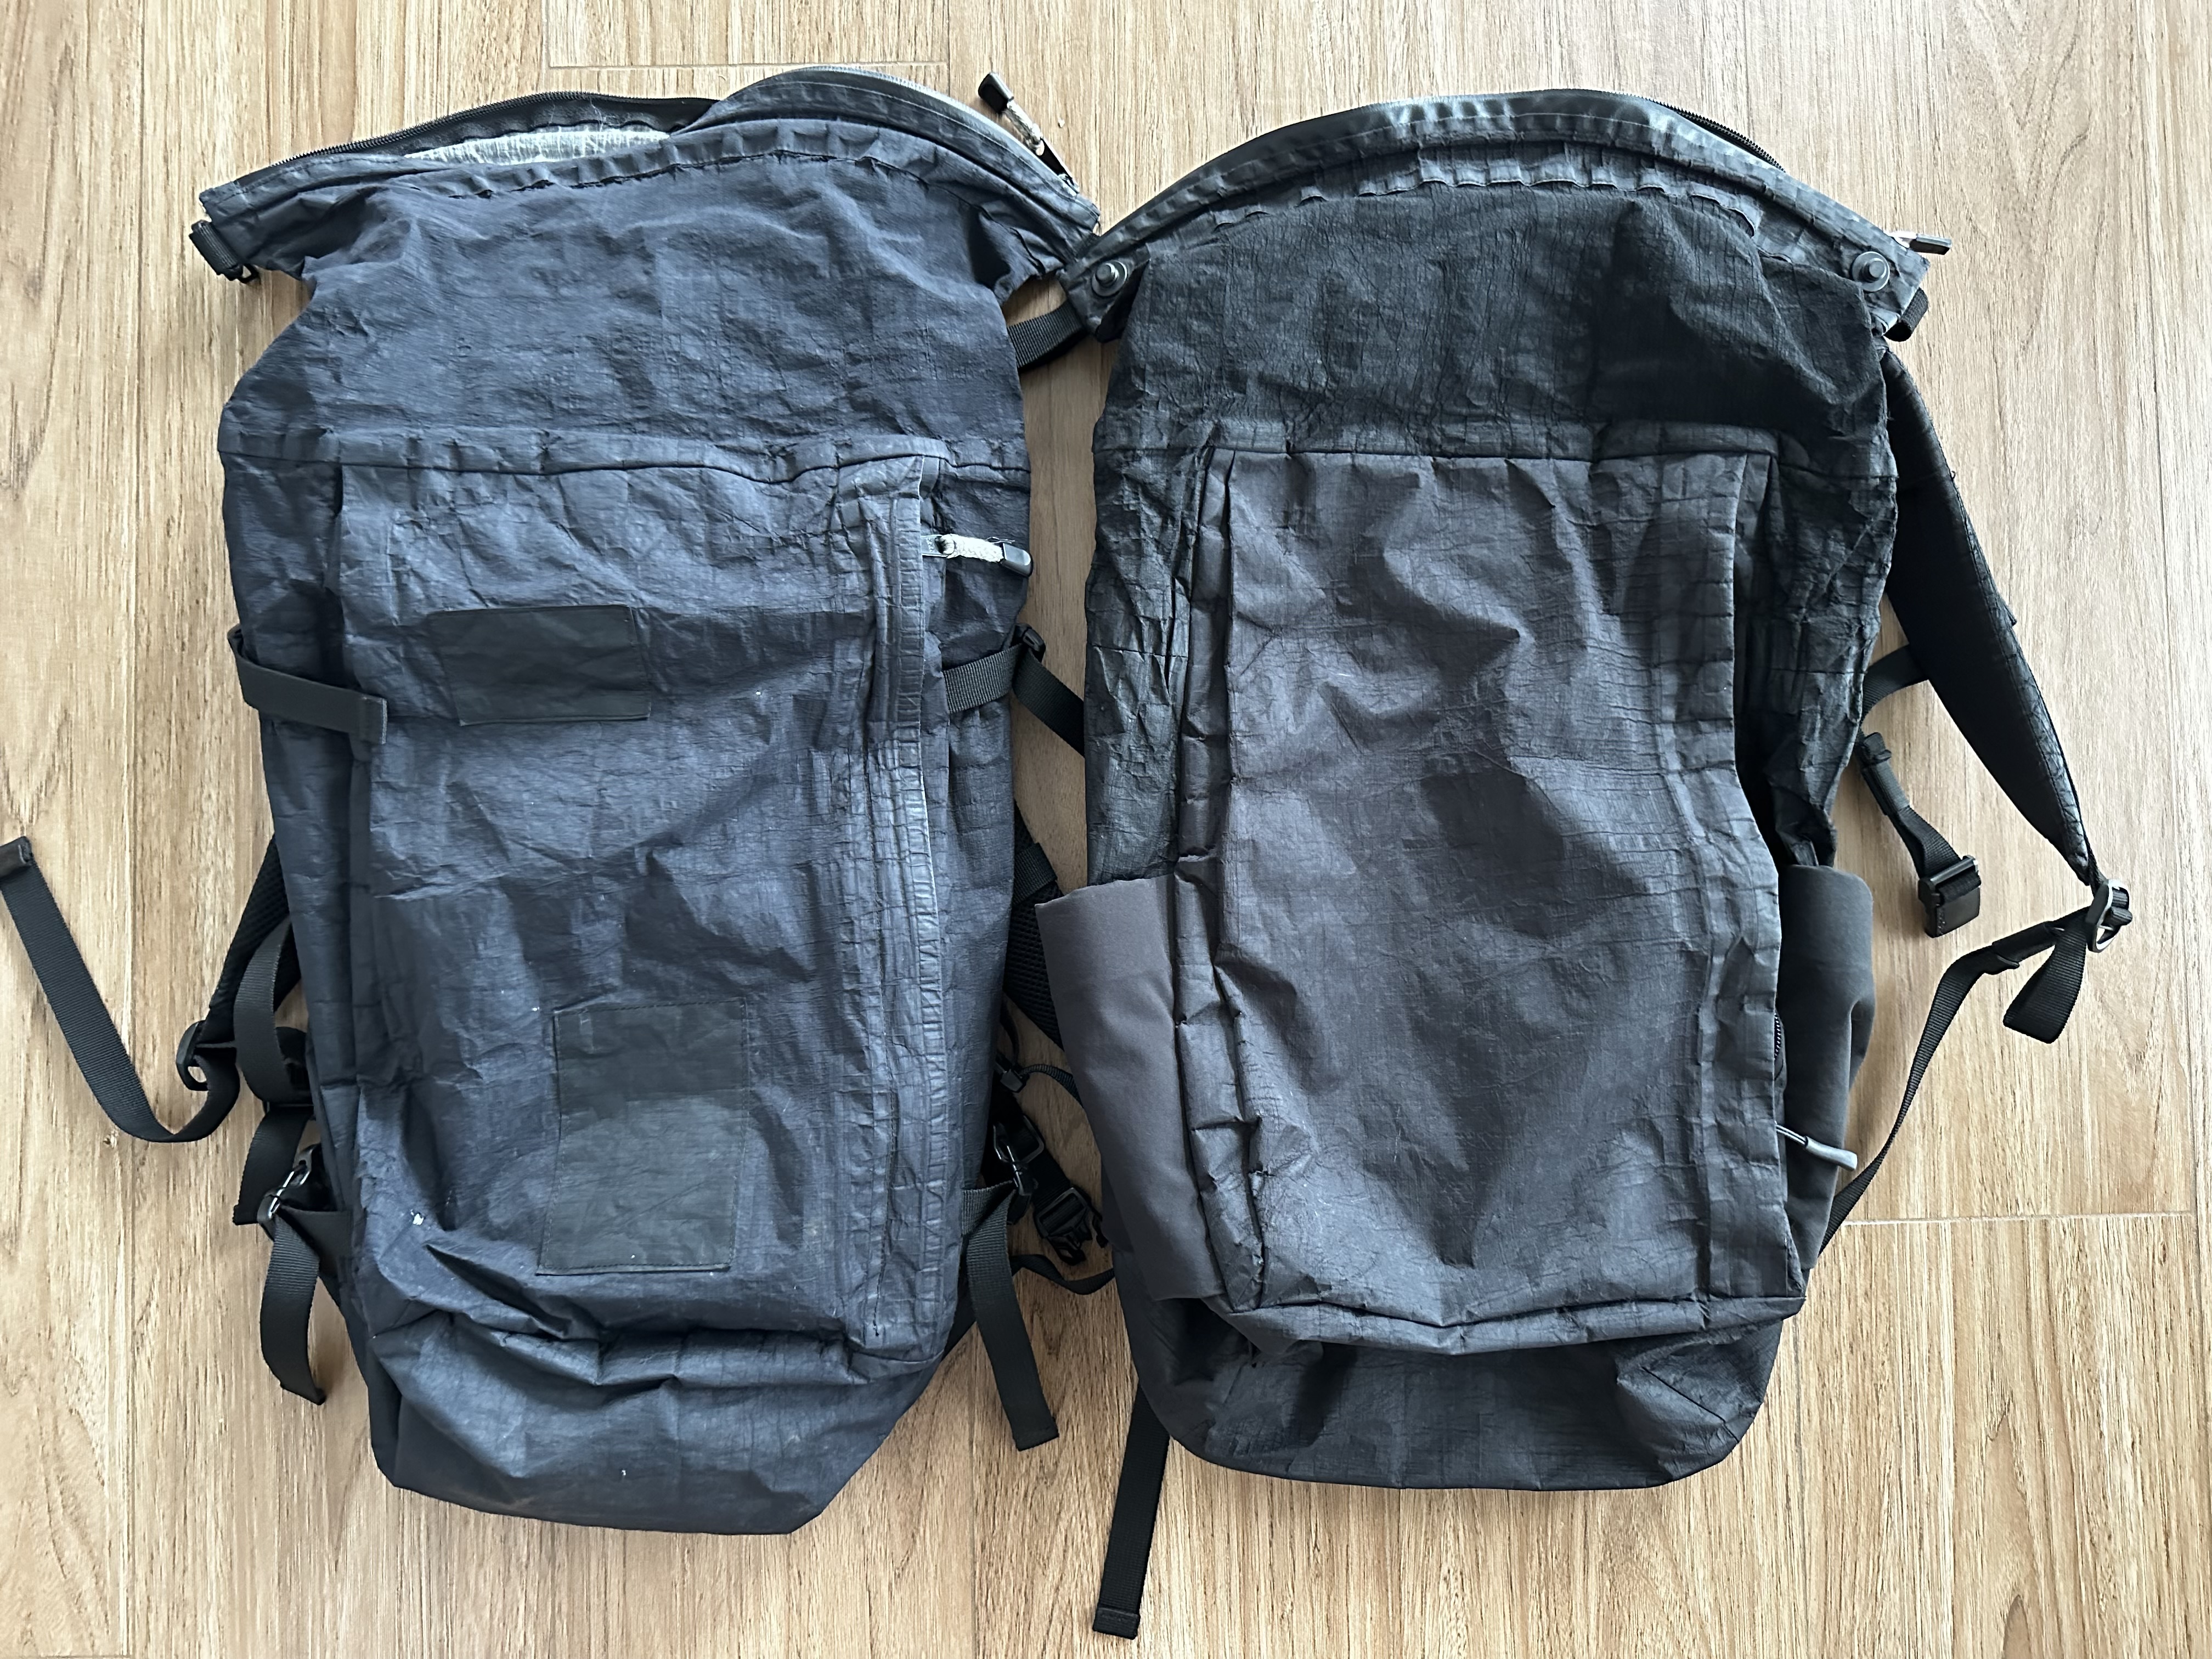 A Rofmia backpack v1 (40L) and v2